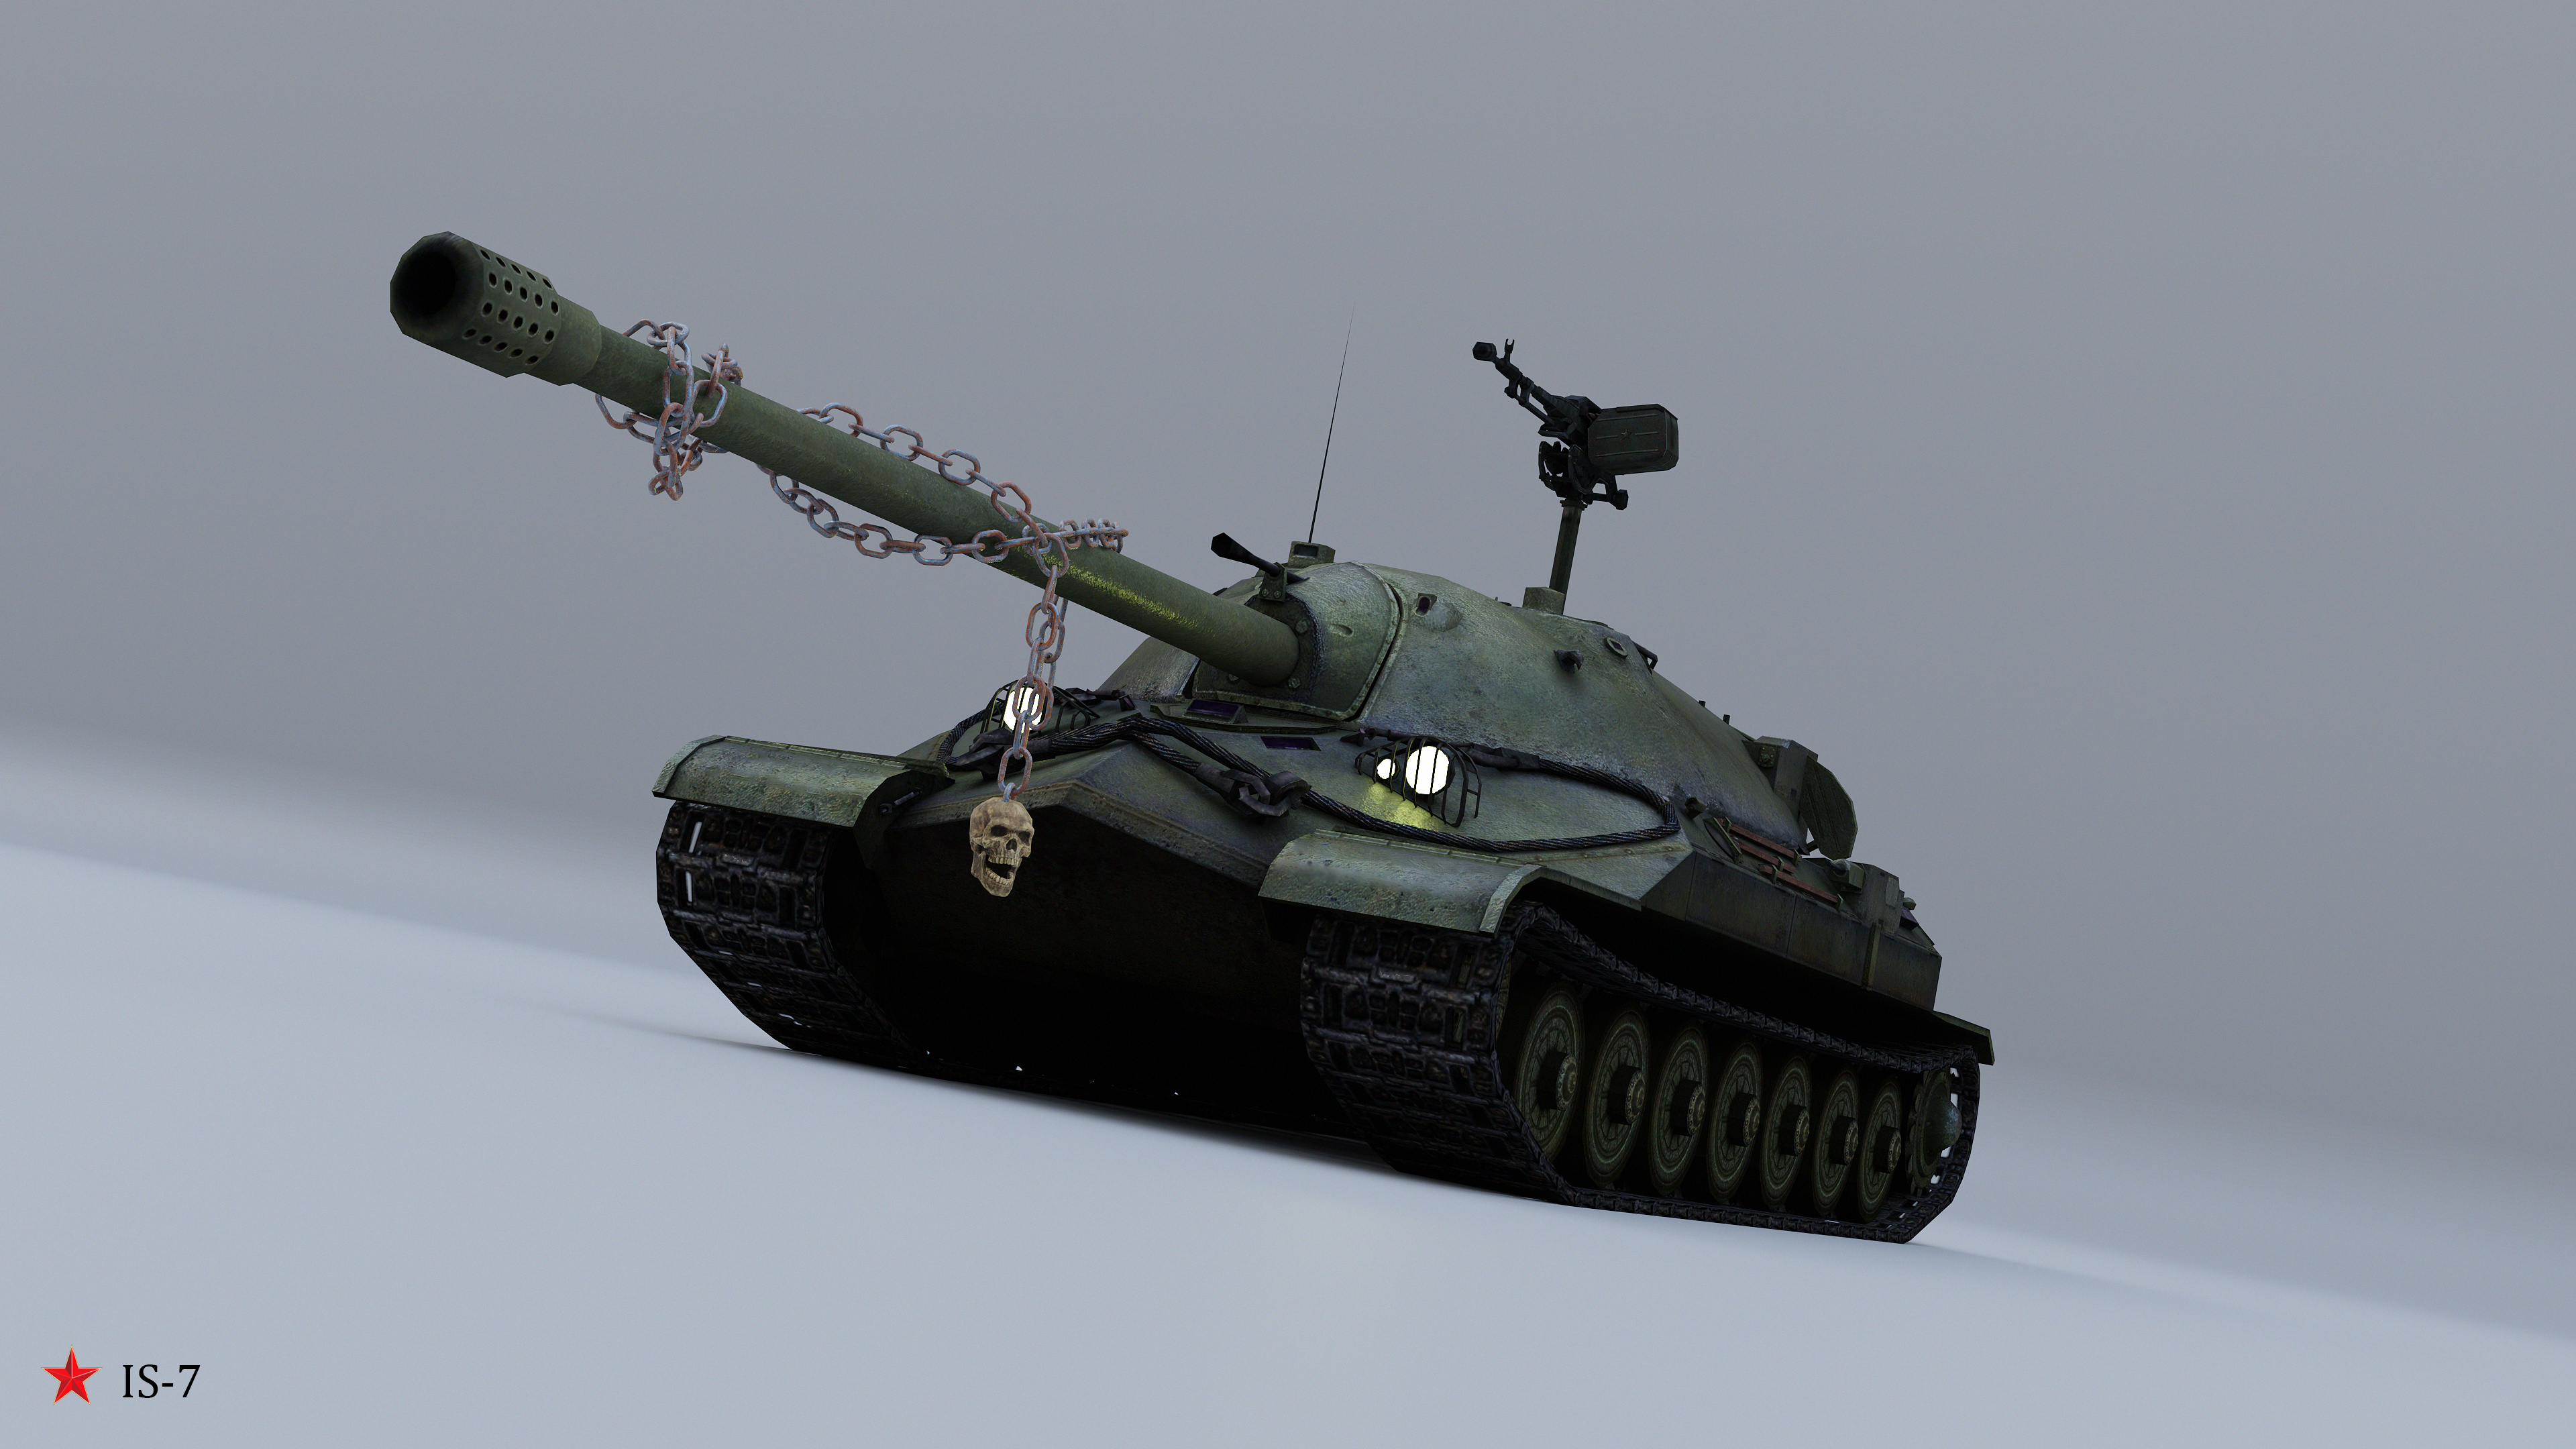 IS 7 Tank Vehicle World War Ii Demon Chains Skull PunkCrow 3840x2160